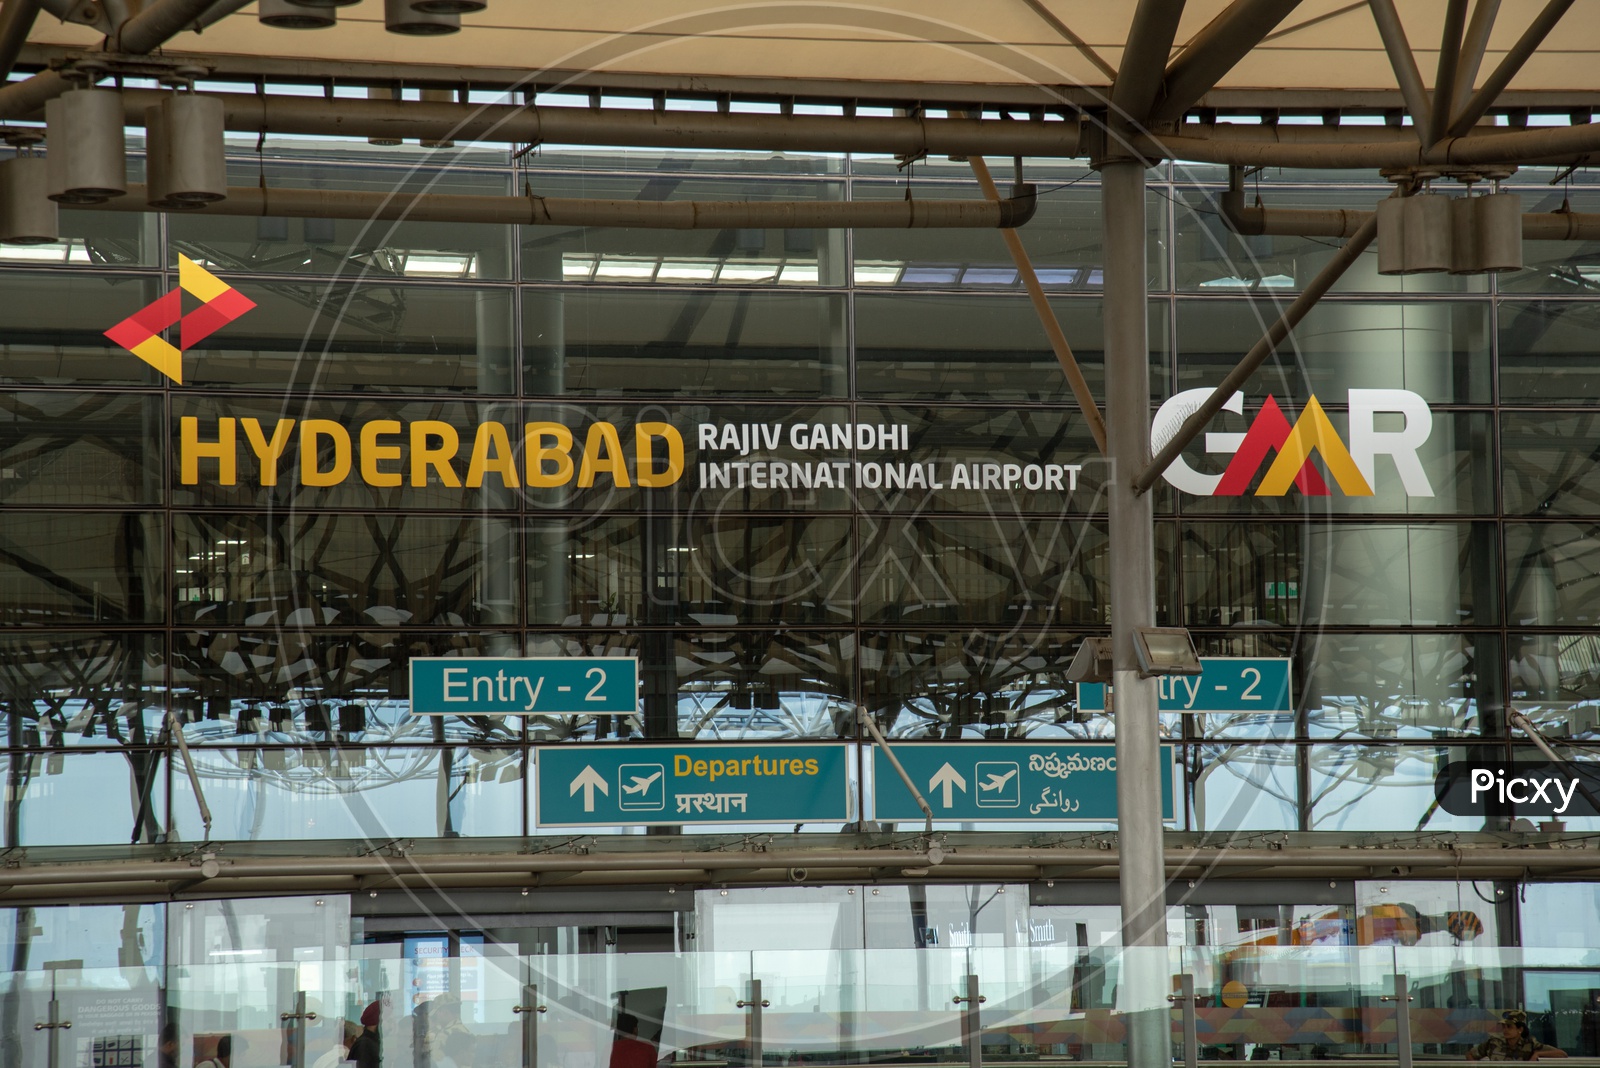 Rajiv Gandhi International Airport (HYD), Hyderabad